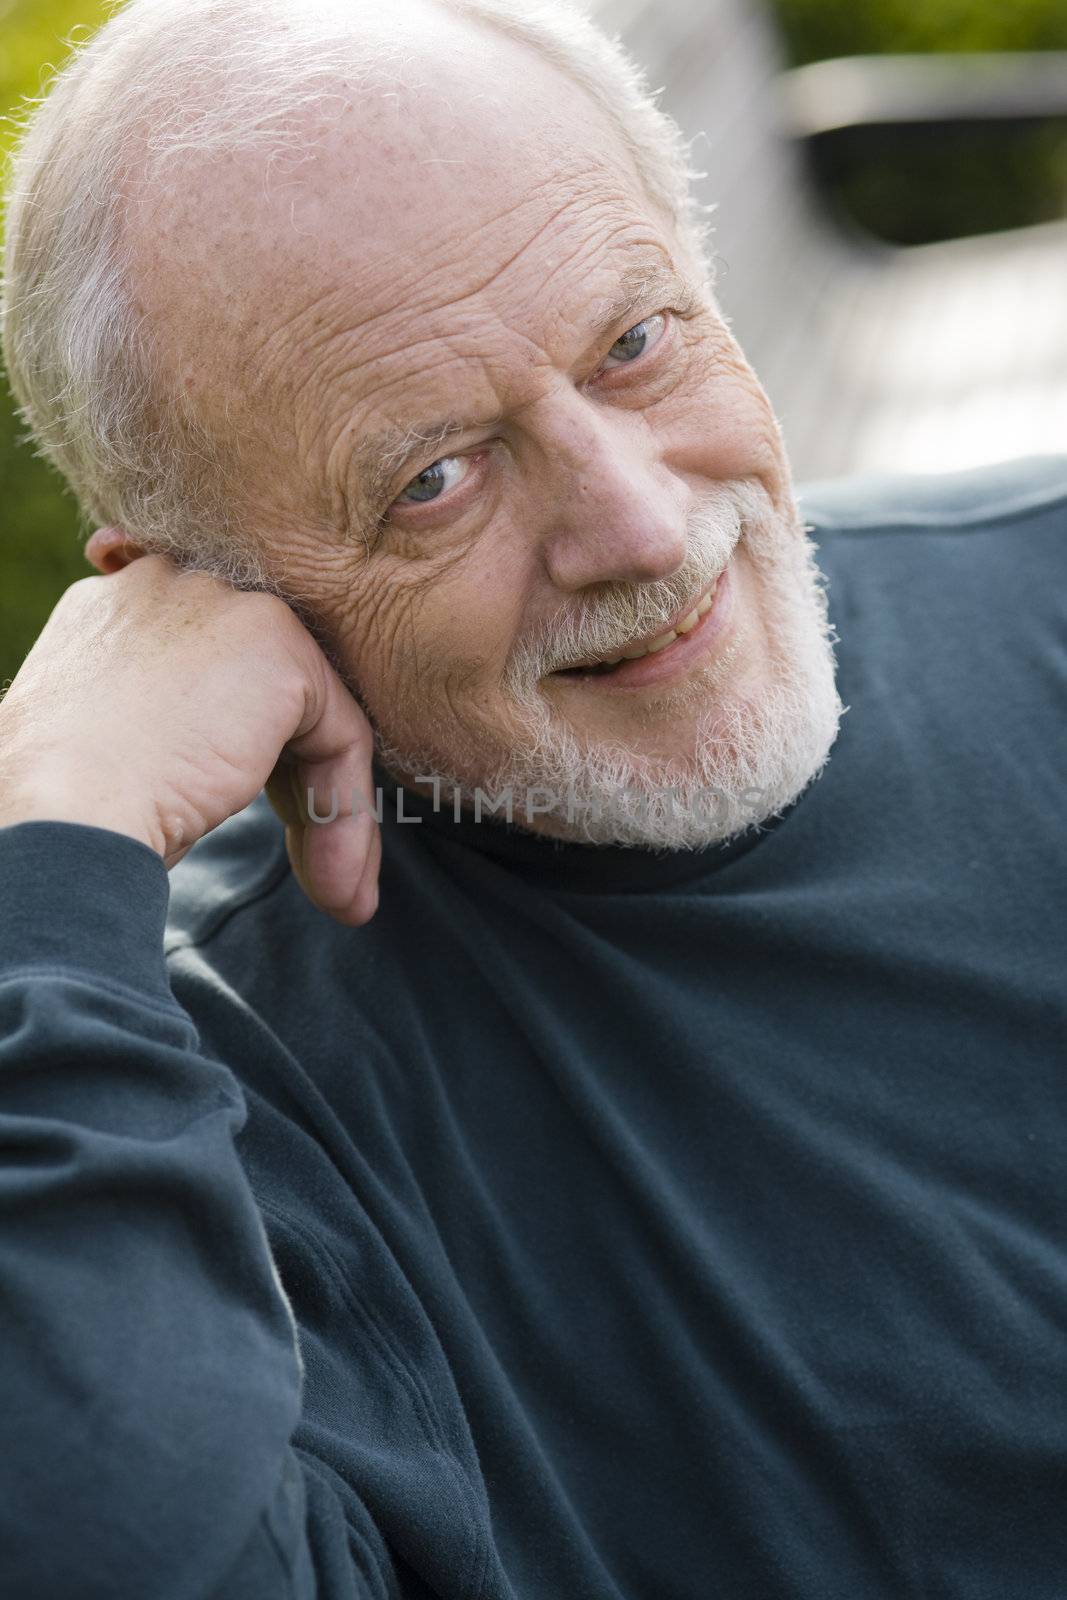 Portrait of an Elderly Gentleman Sitting on a Bench in a Park